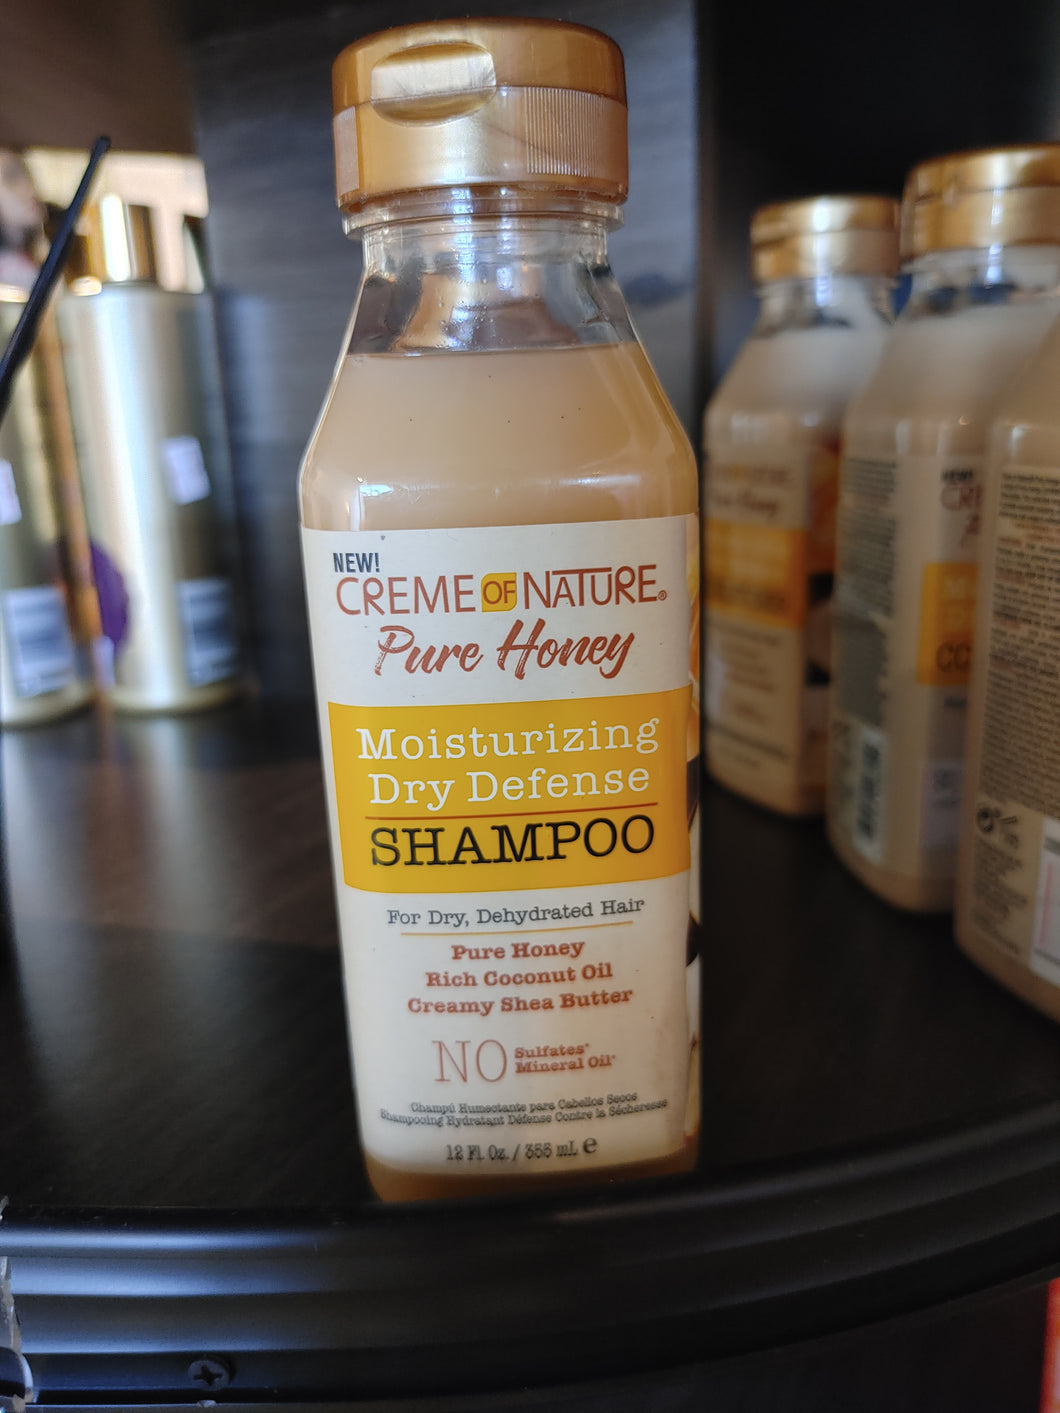 Creme of Nature Dry Defense Shampoo